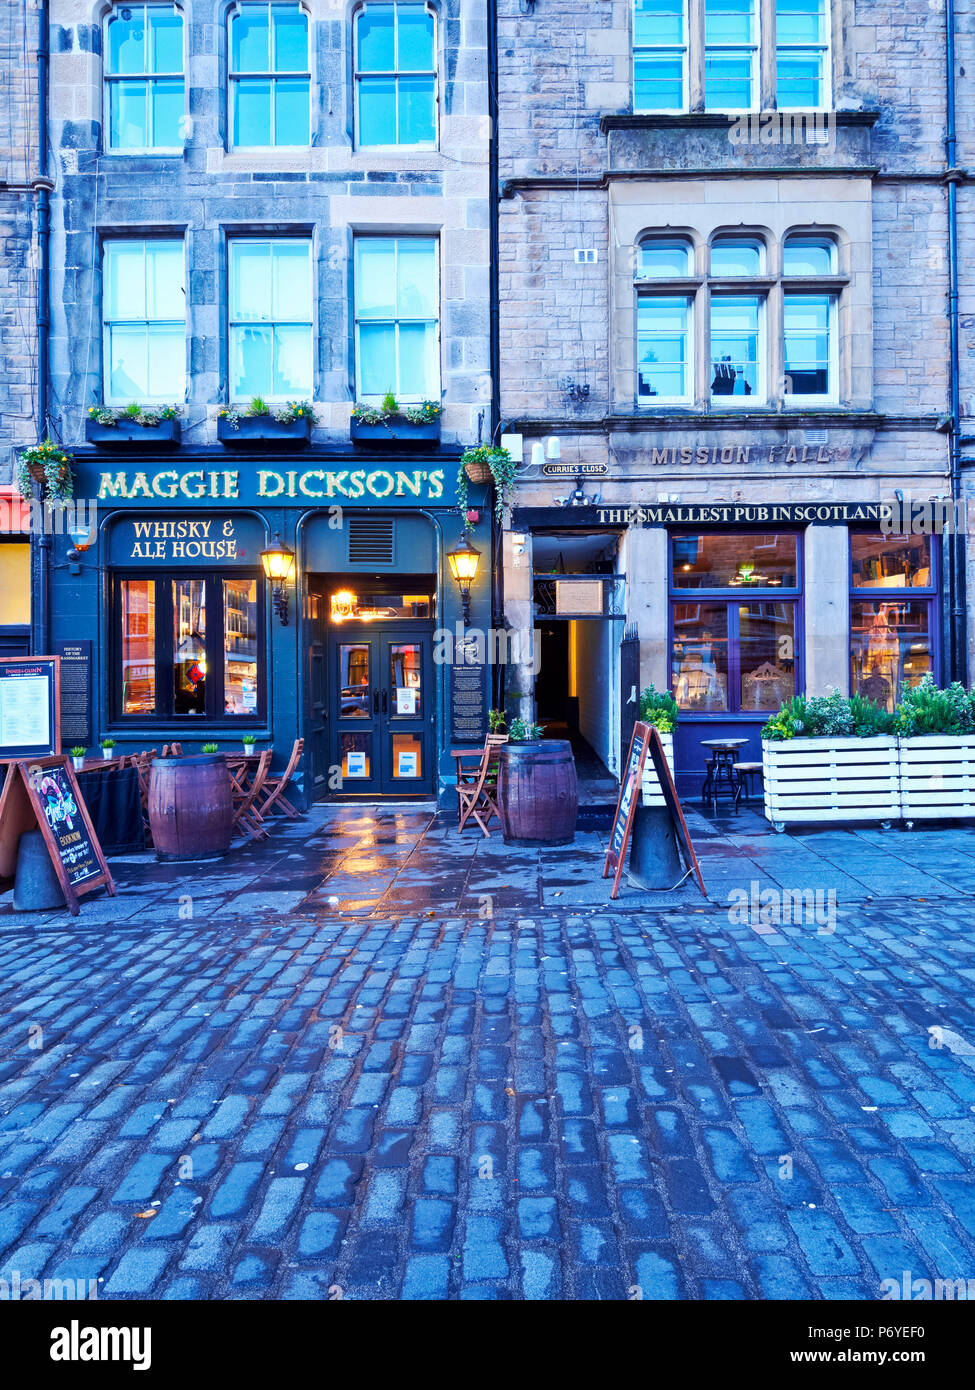 UK, Scotland, Lothian, Edinburgh, Grassmarket Square, Twilight view of the Maggie Dickson's and The Smallest Pub in Scotland. Stock Photo